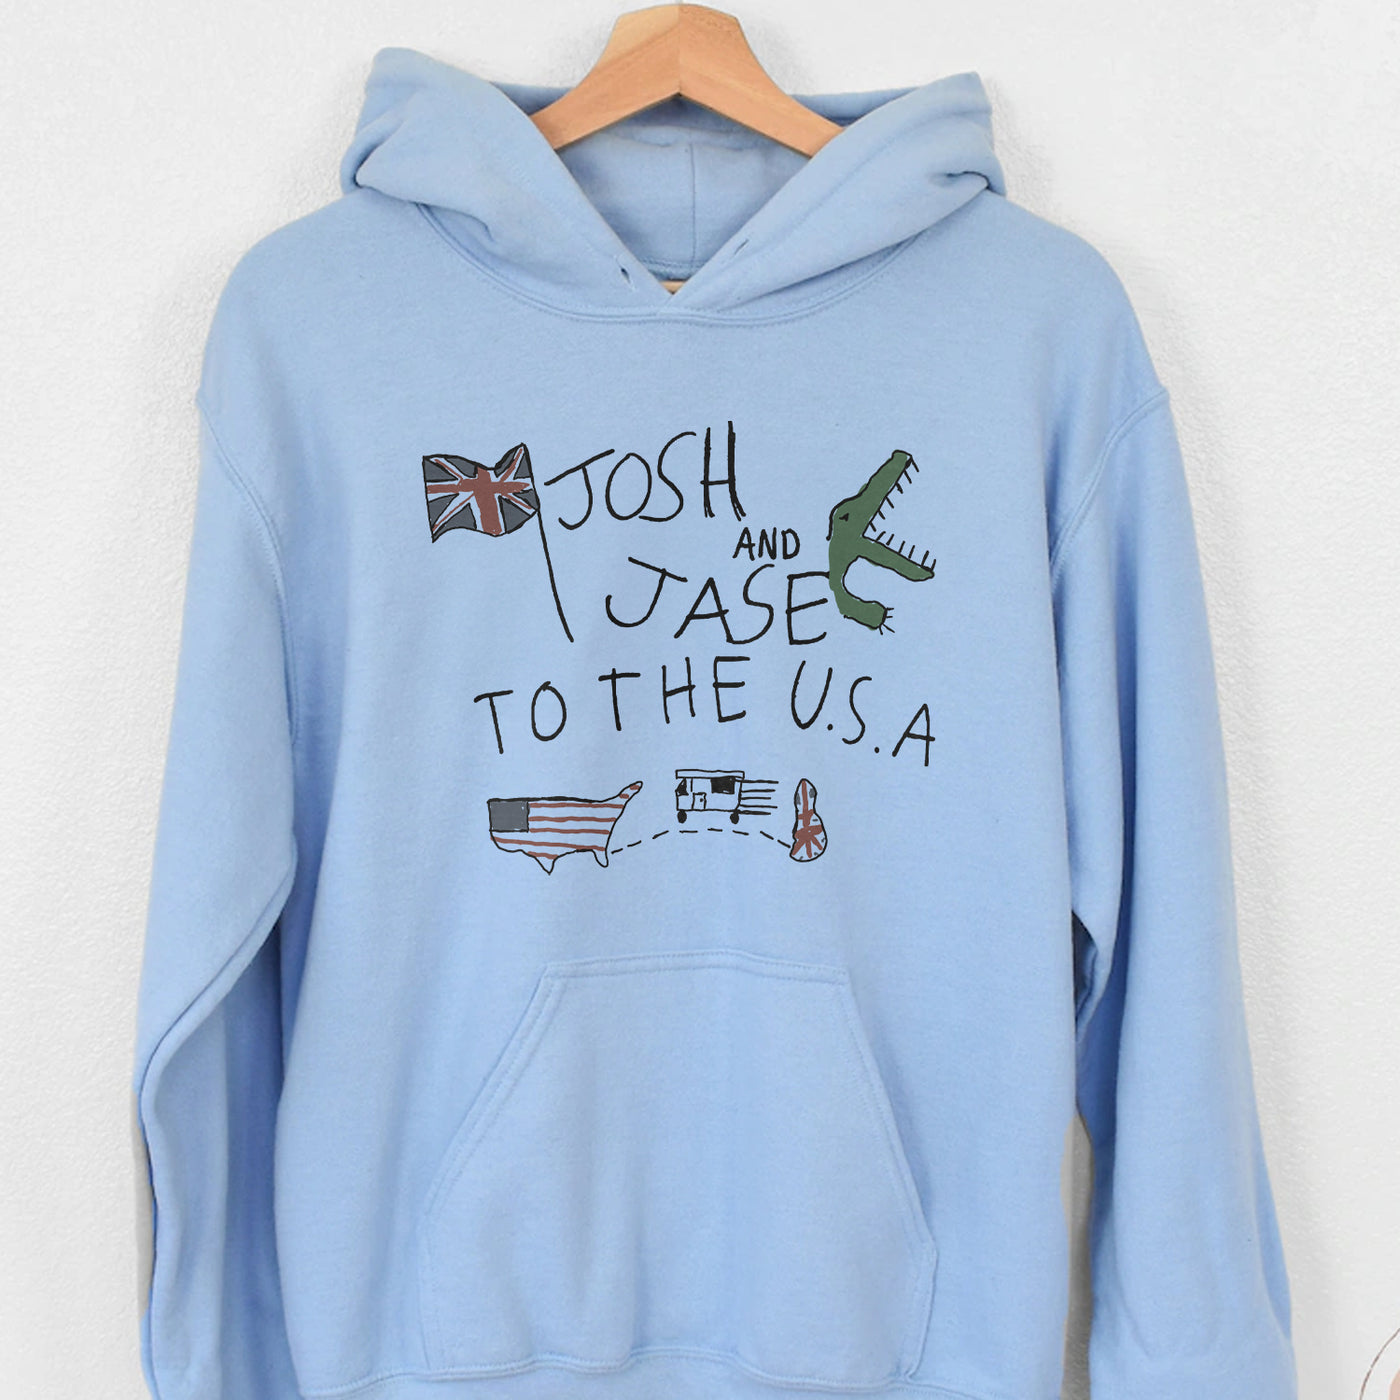 Josh And Jase To The USA Hoodies & Sweatshirts